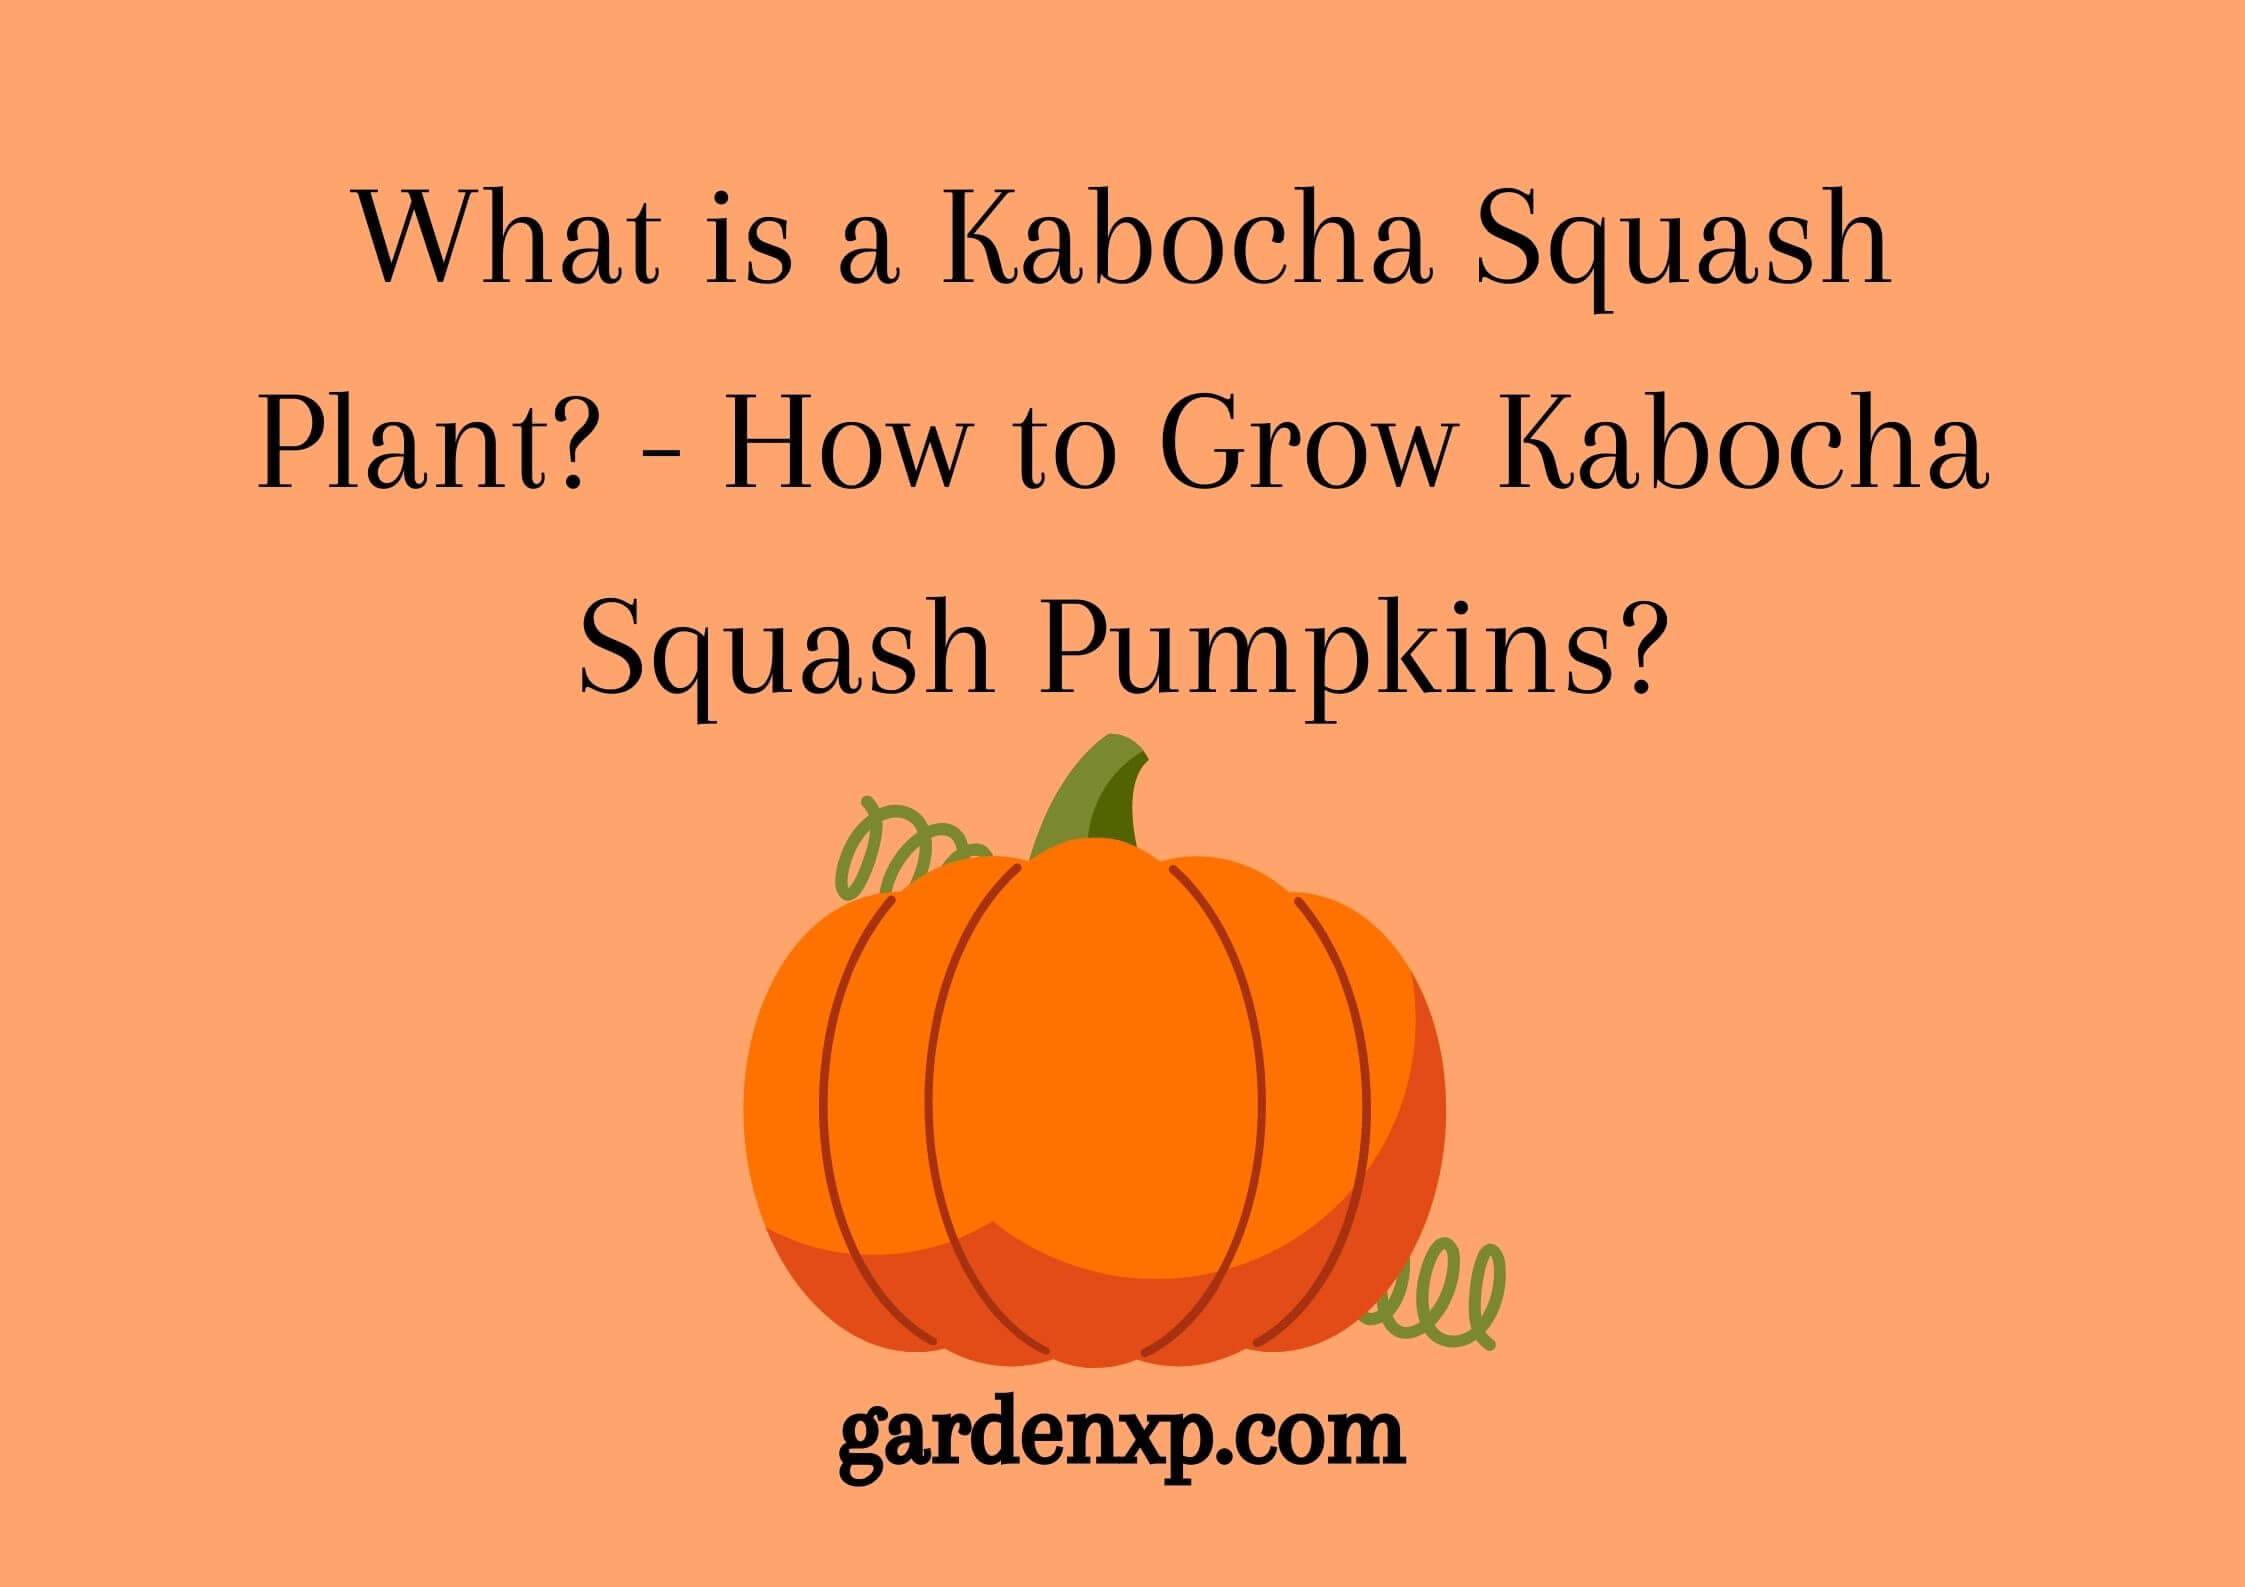 What is a Kabocha Squash Plant? - How to Grow Kabocha Squash Pumpkins?